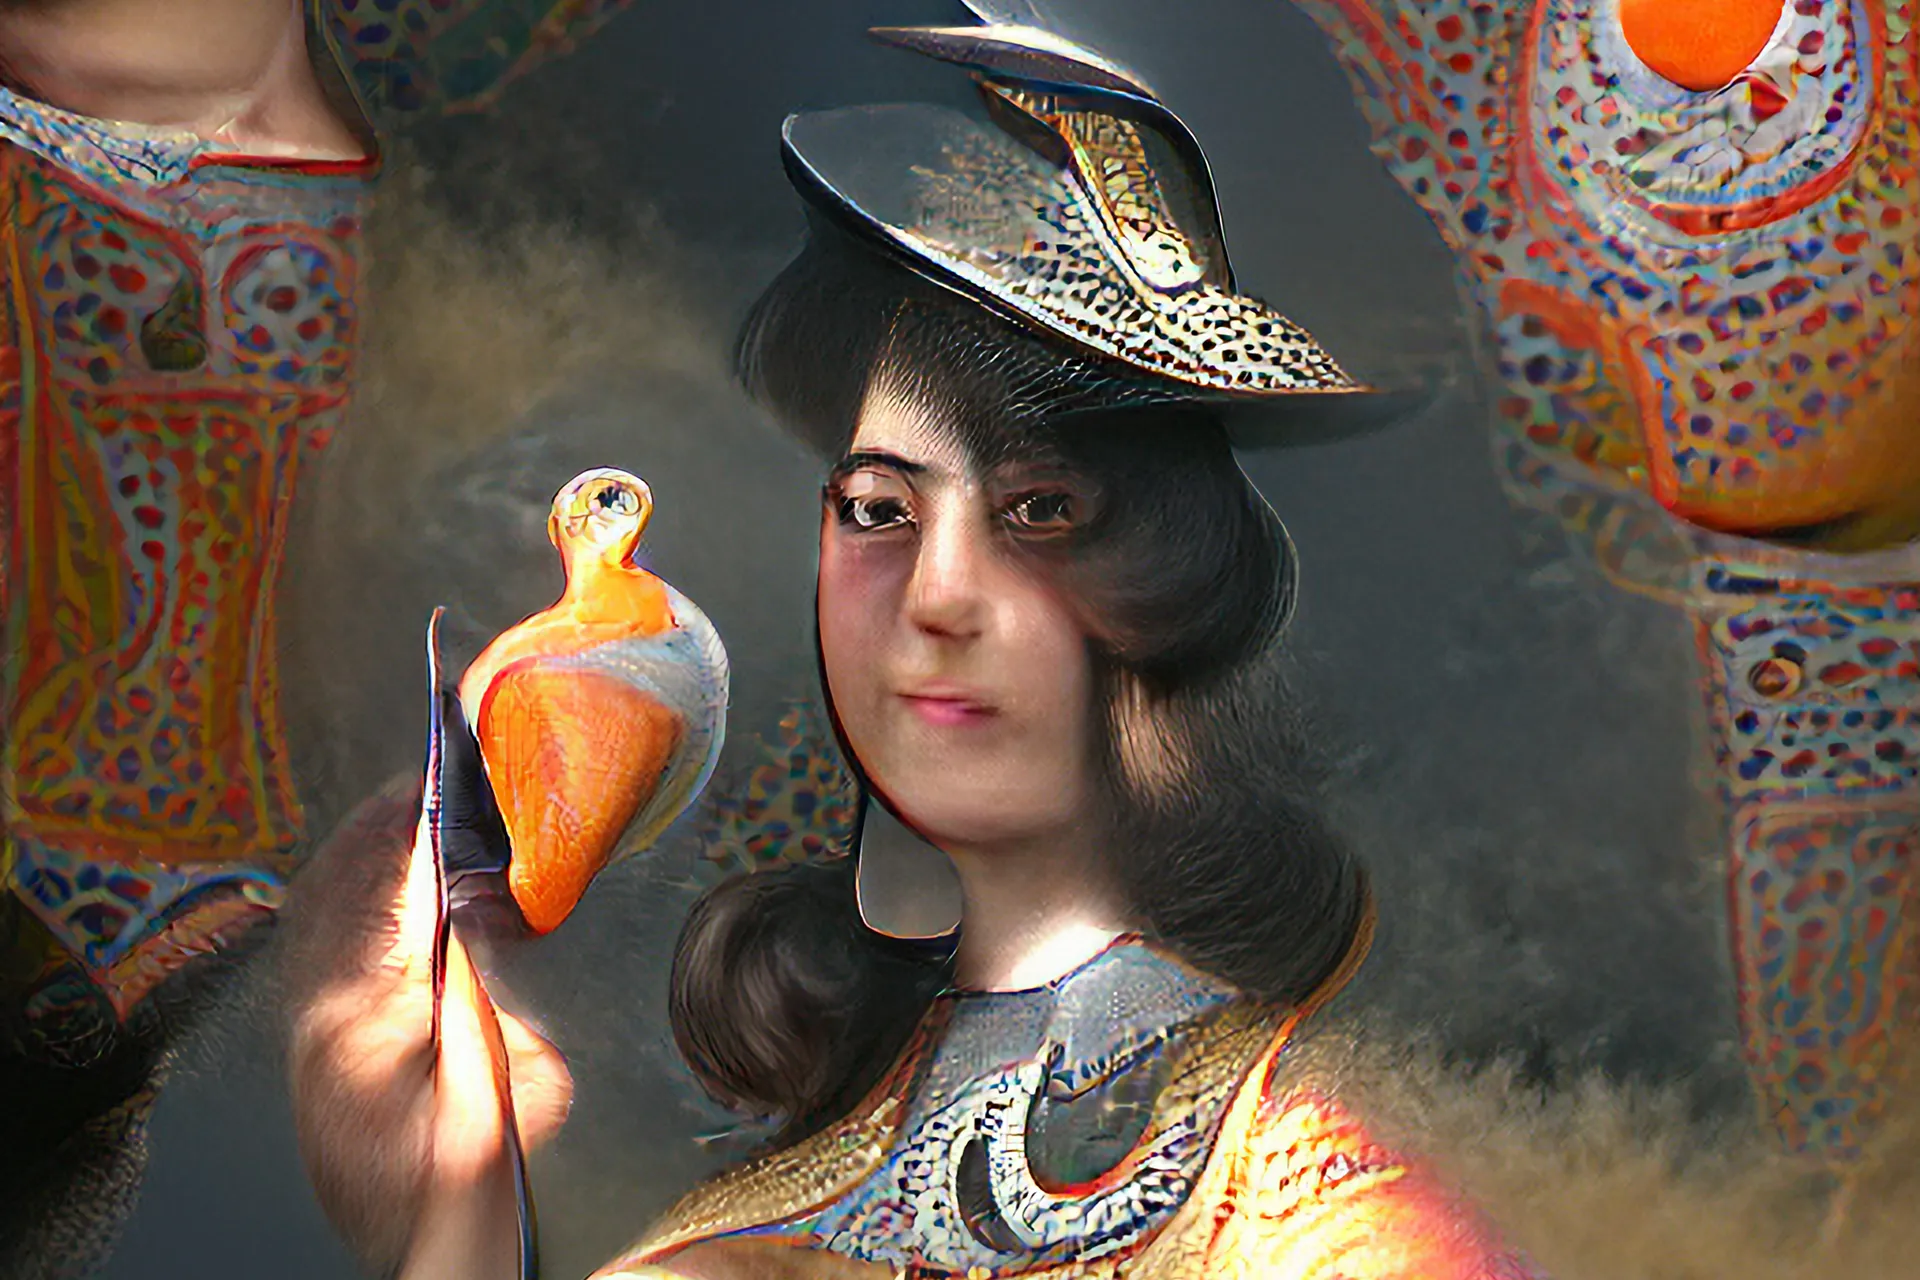 File:Colage de Armenia-Colombia.jpg - Wikimedia Commons